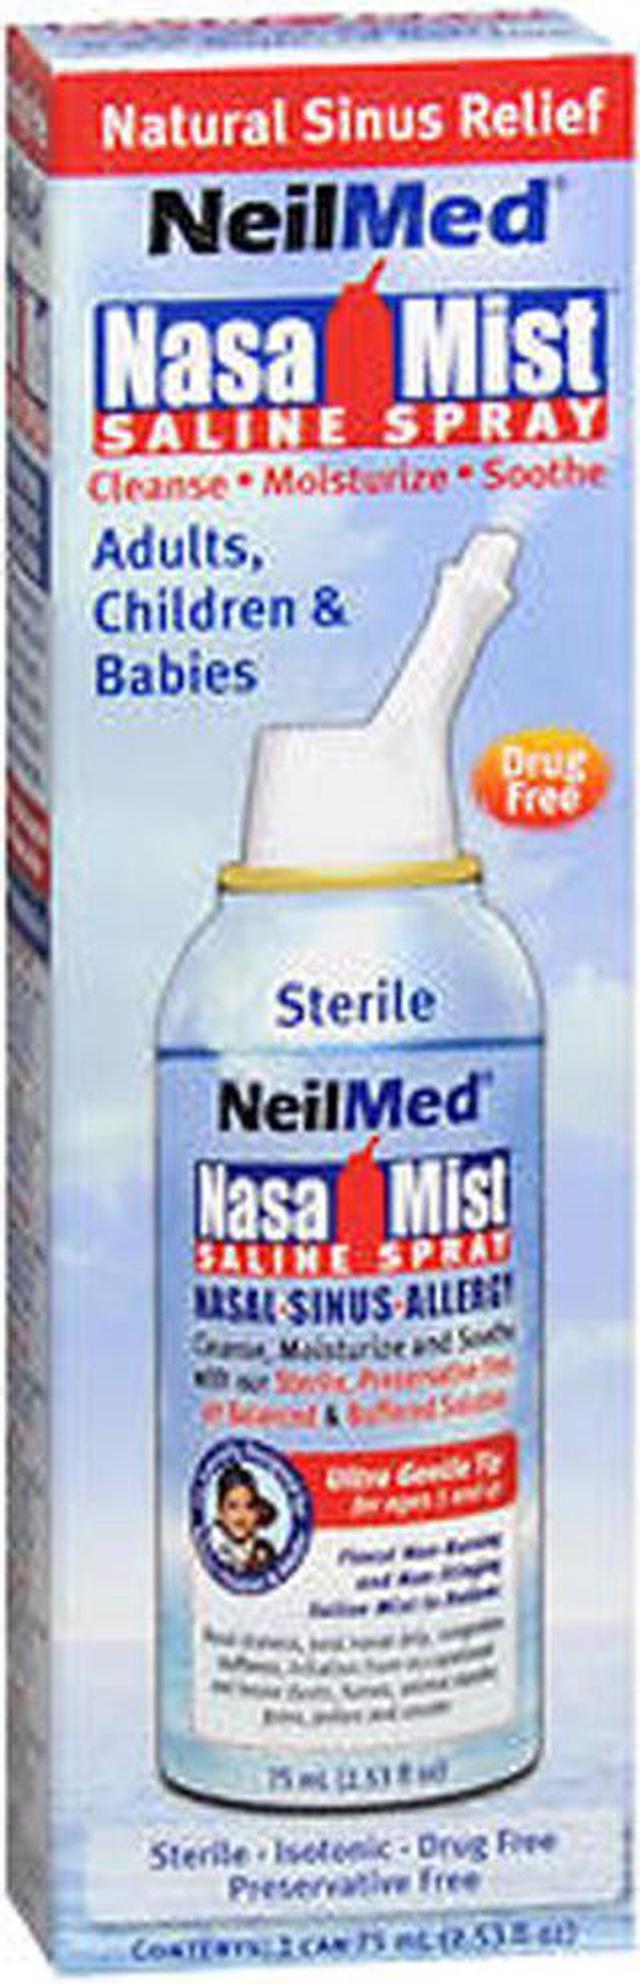 Nasa Mist Spray Nasal 75ml 